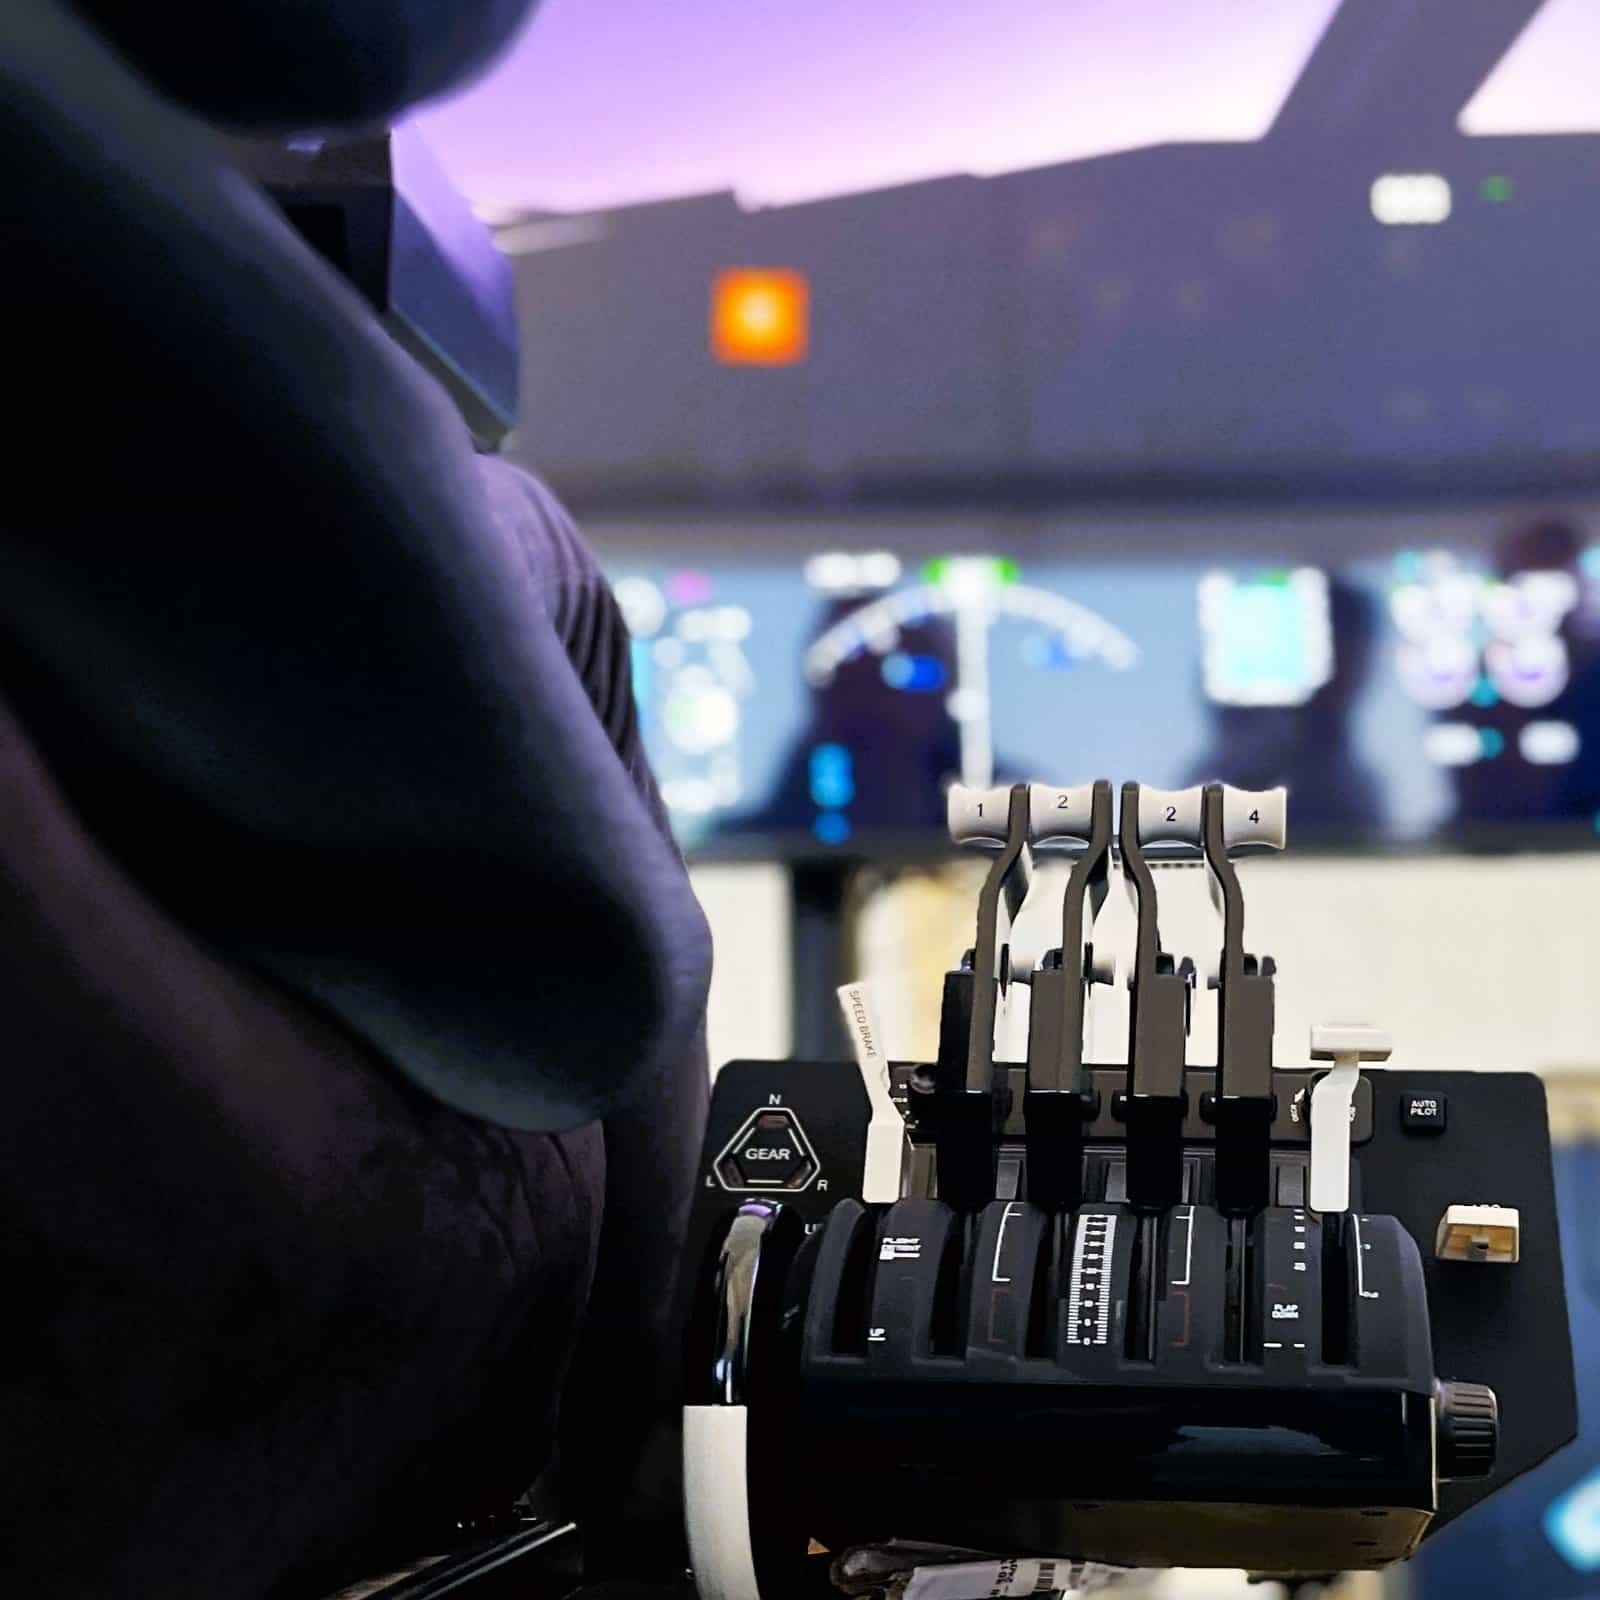 RoarFun Clients Trumpf 100 years airplane immersive flight simulator at 100 years company anniversary